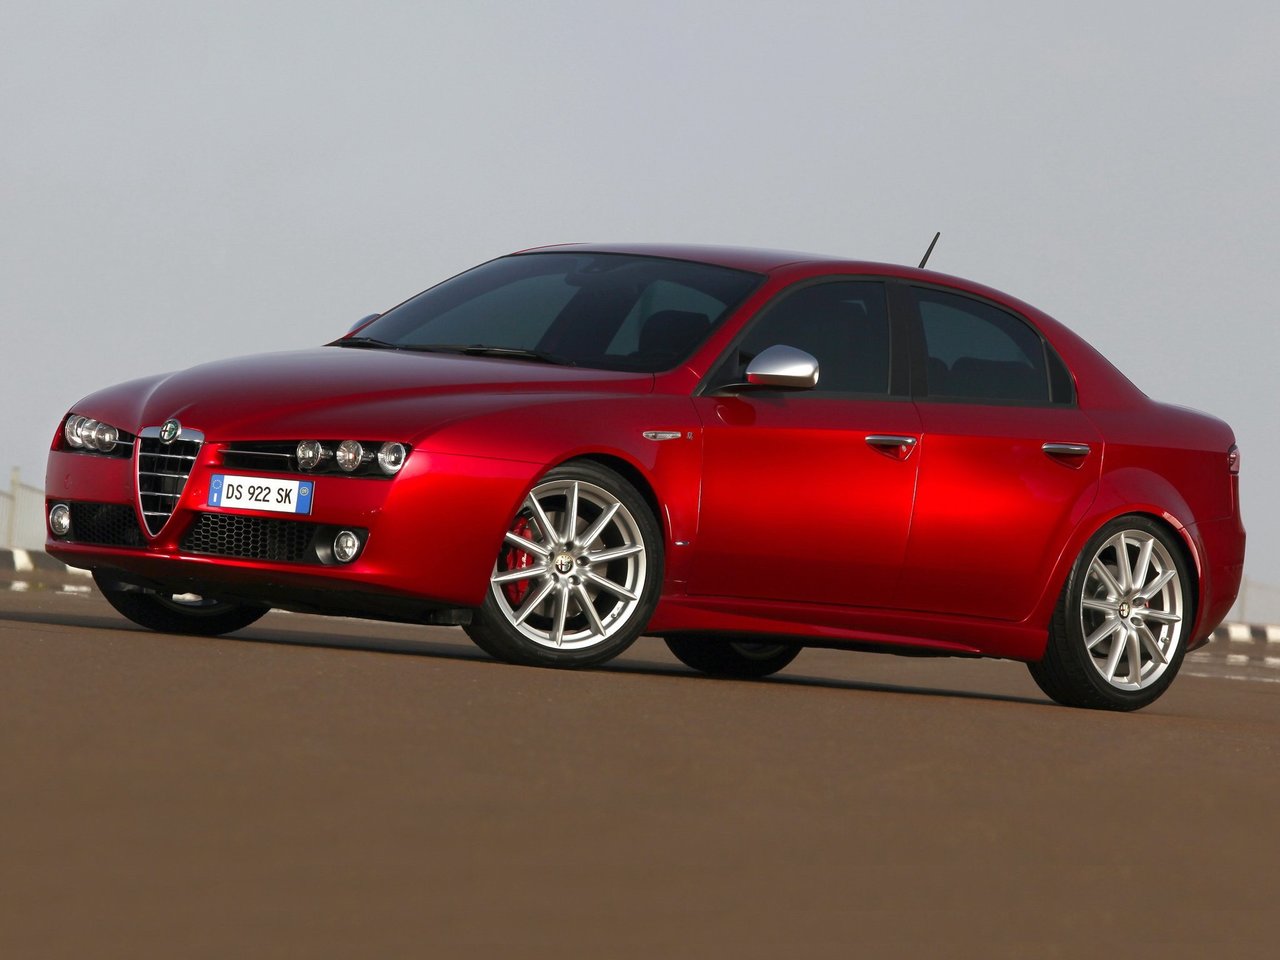 Расход газа семи комплектаций седана Alfa Romeo 159. Разница стоимости заправки газом и бензином. Автономный пробег до и после установки ГБО.